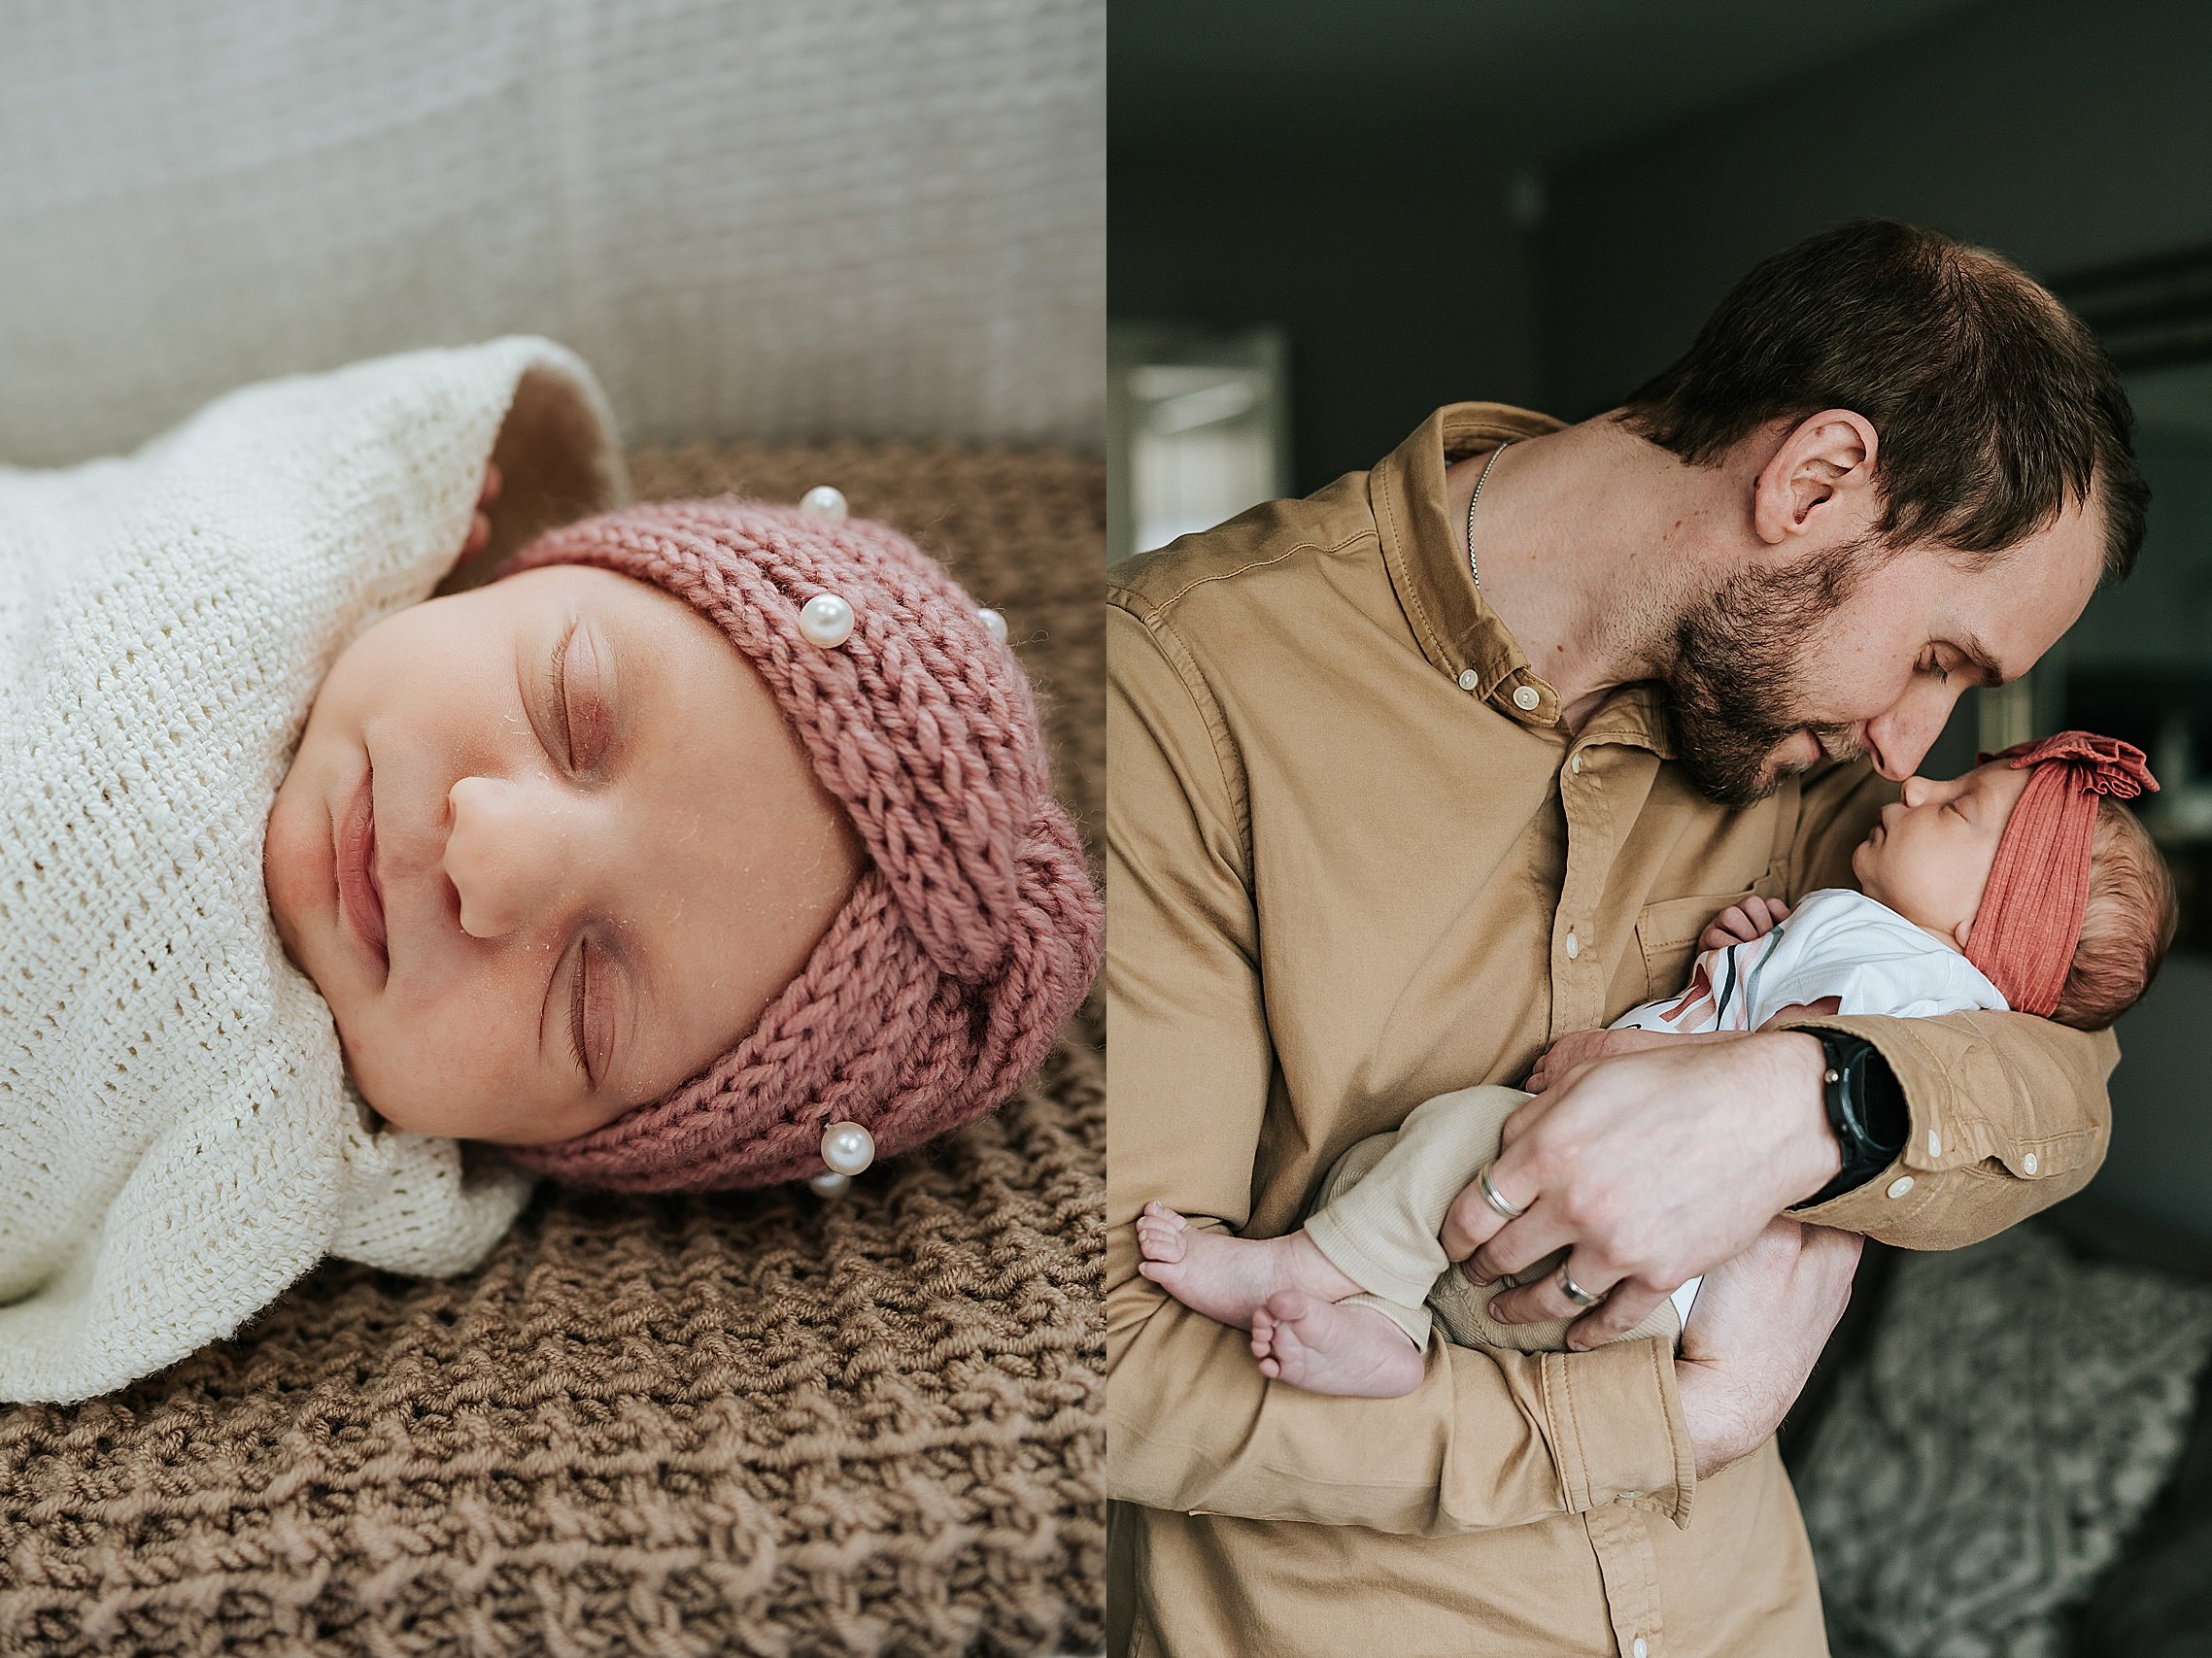 Imogen+newborn+lacashire+photography+photographer+lifestyle+baby_0060.jpg